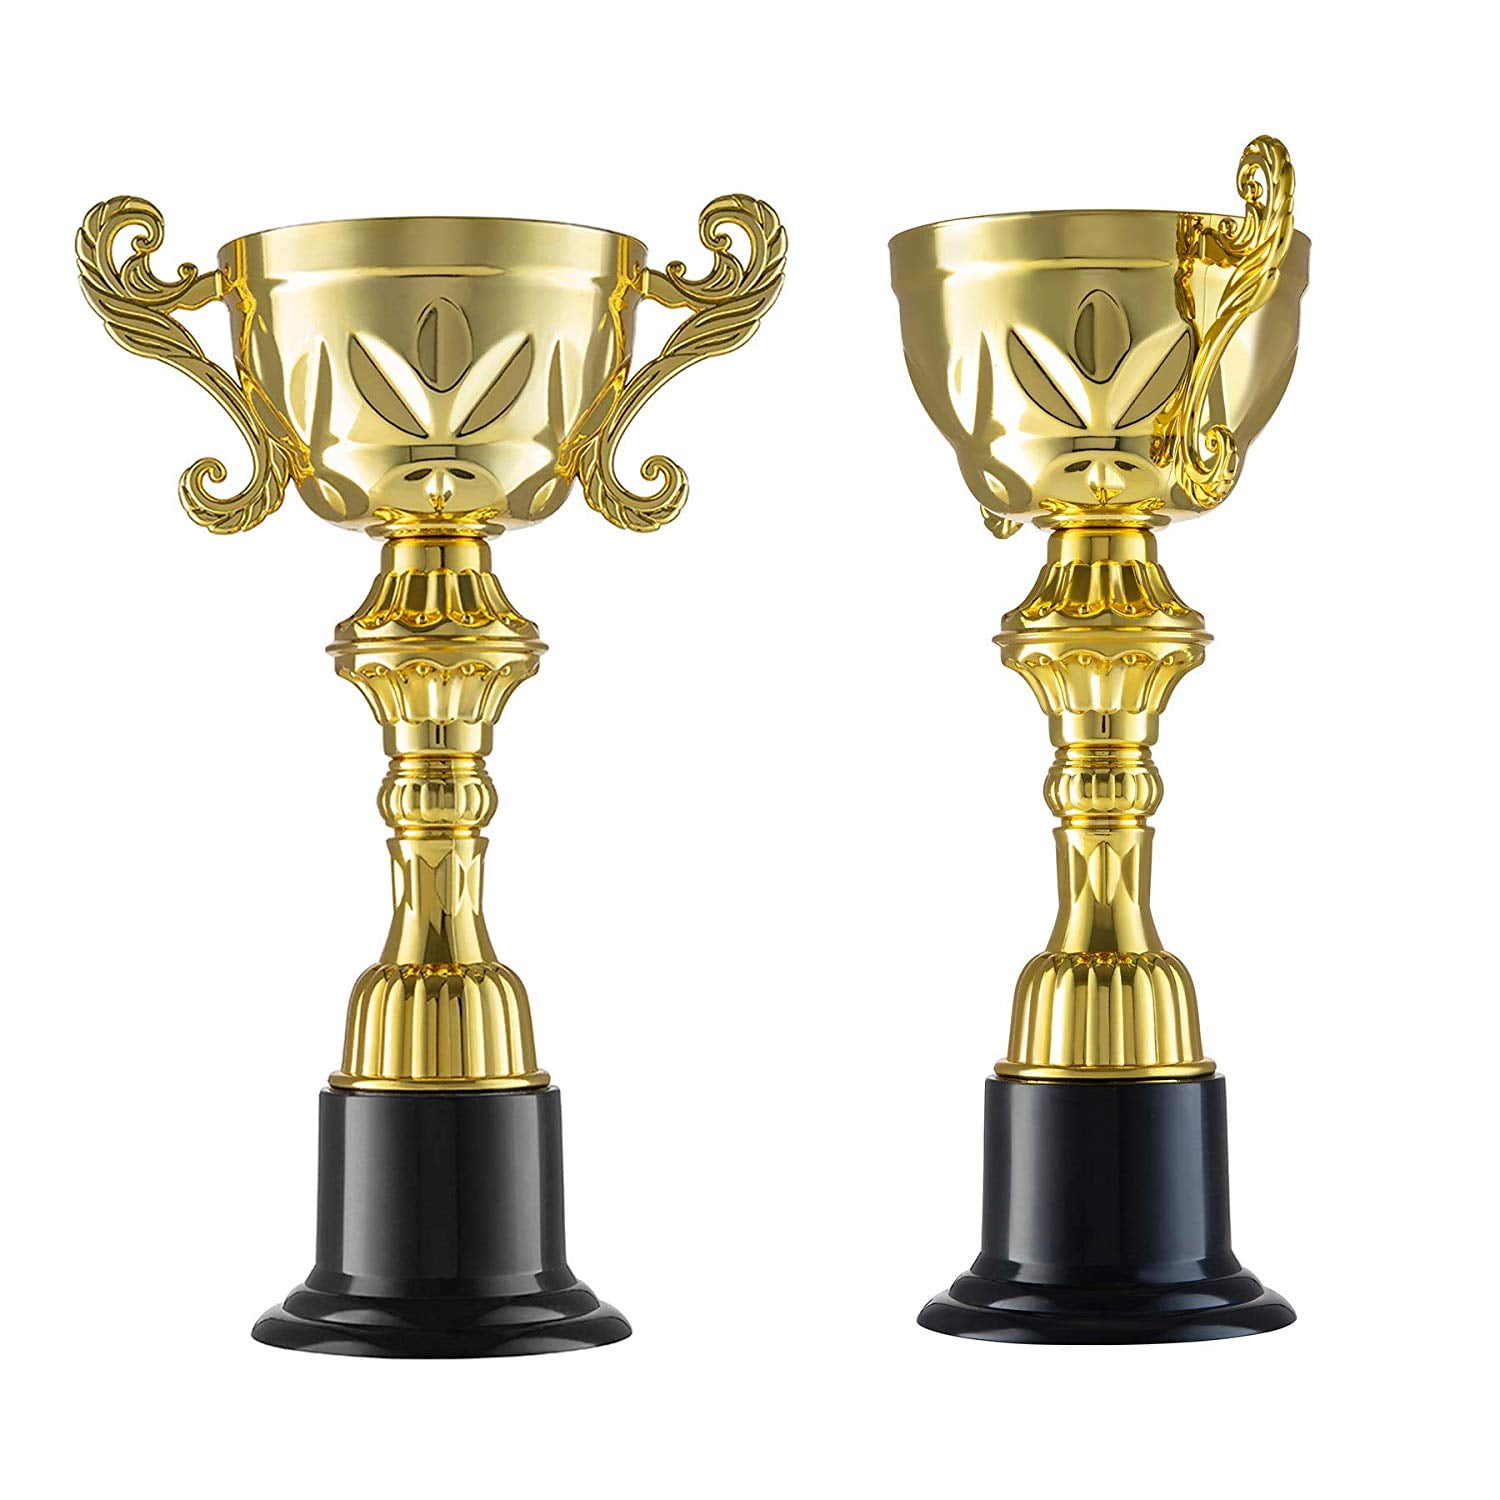 Generic 10PCS Plastic Golden Trophy Award Trophy Cups Plastic Winner Award Trophies for Kids Celebrations Sports Competition Carnival 